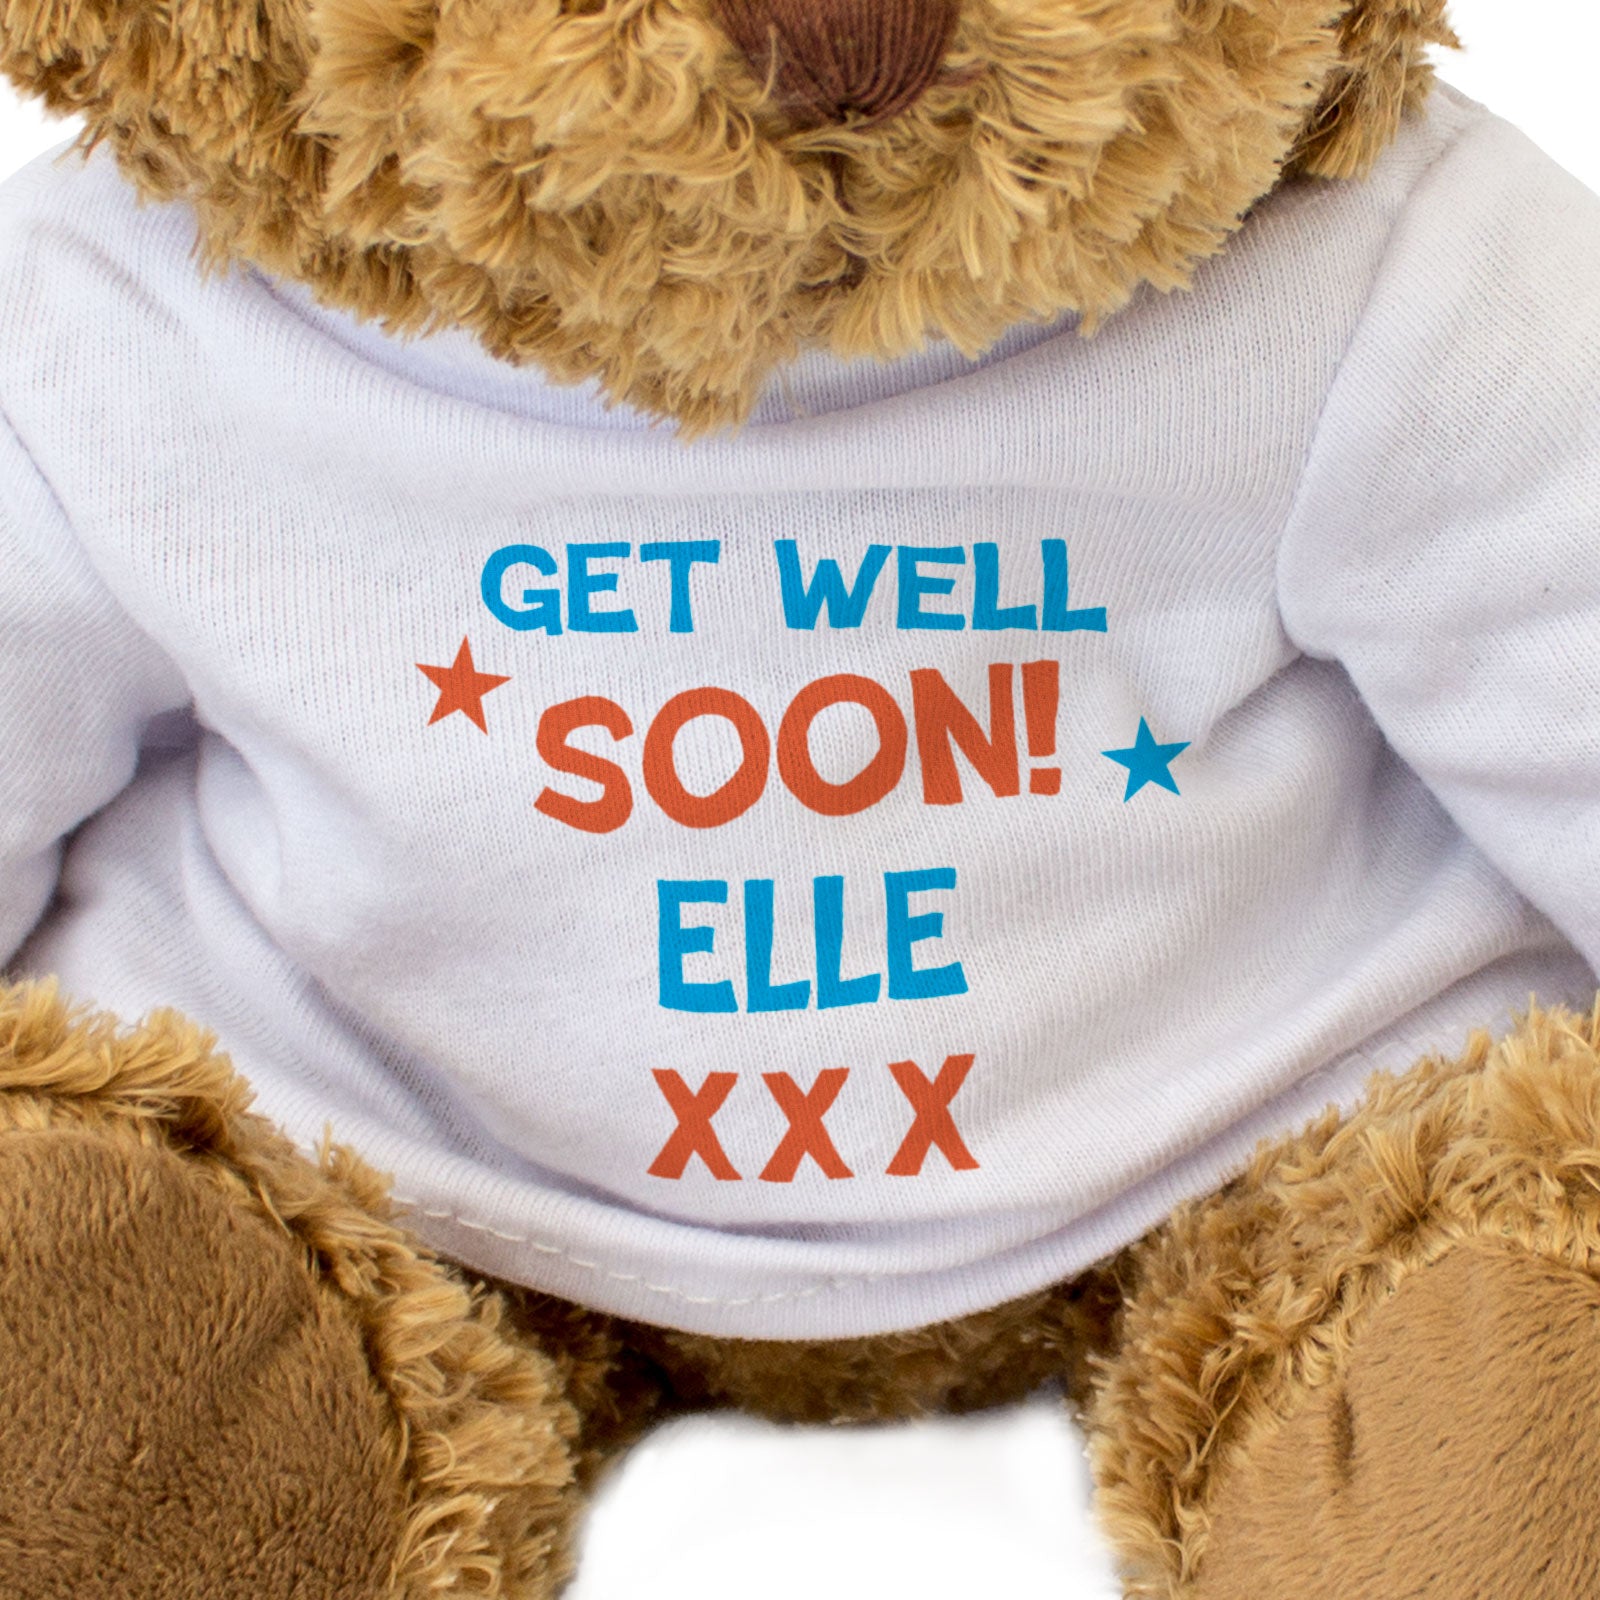 Get Well Soon Elle - Teddy Bear